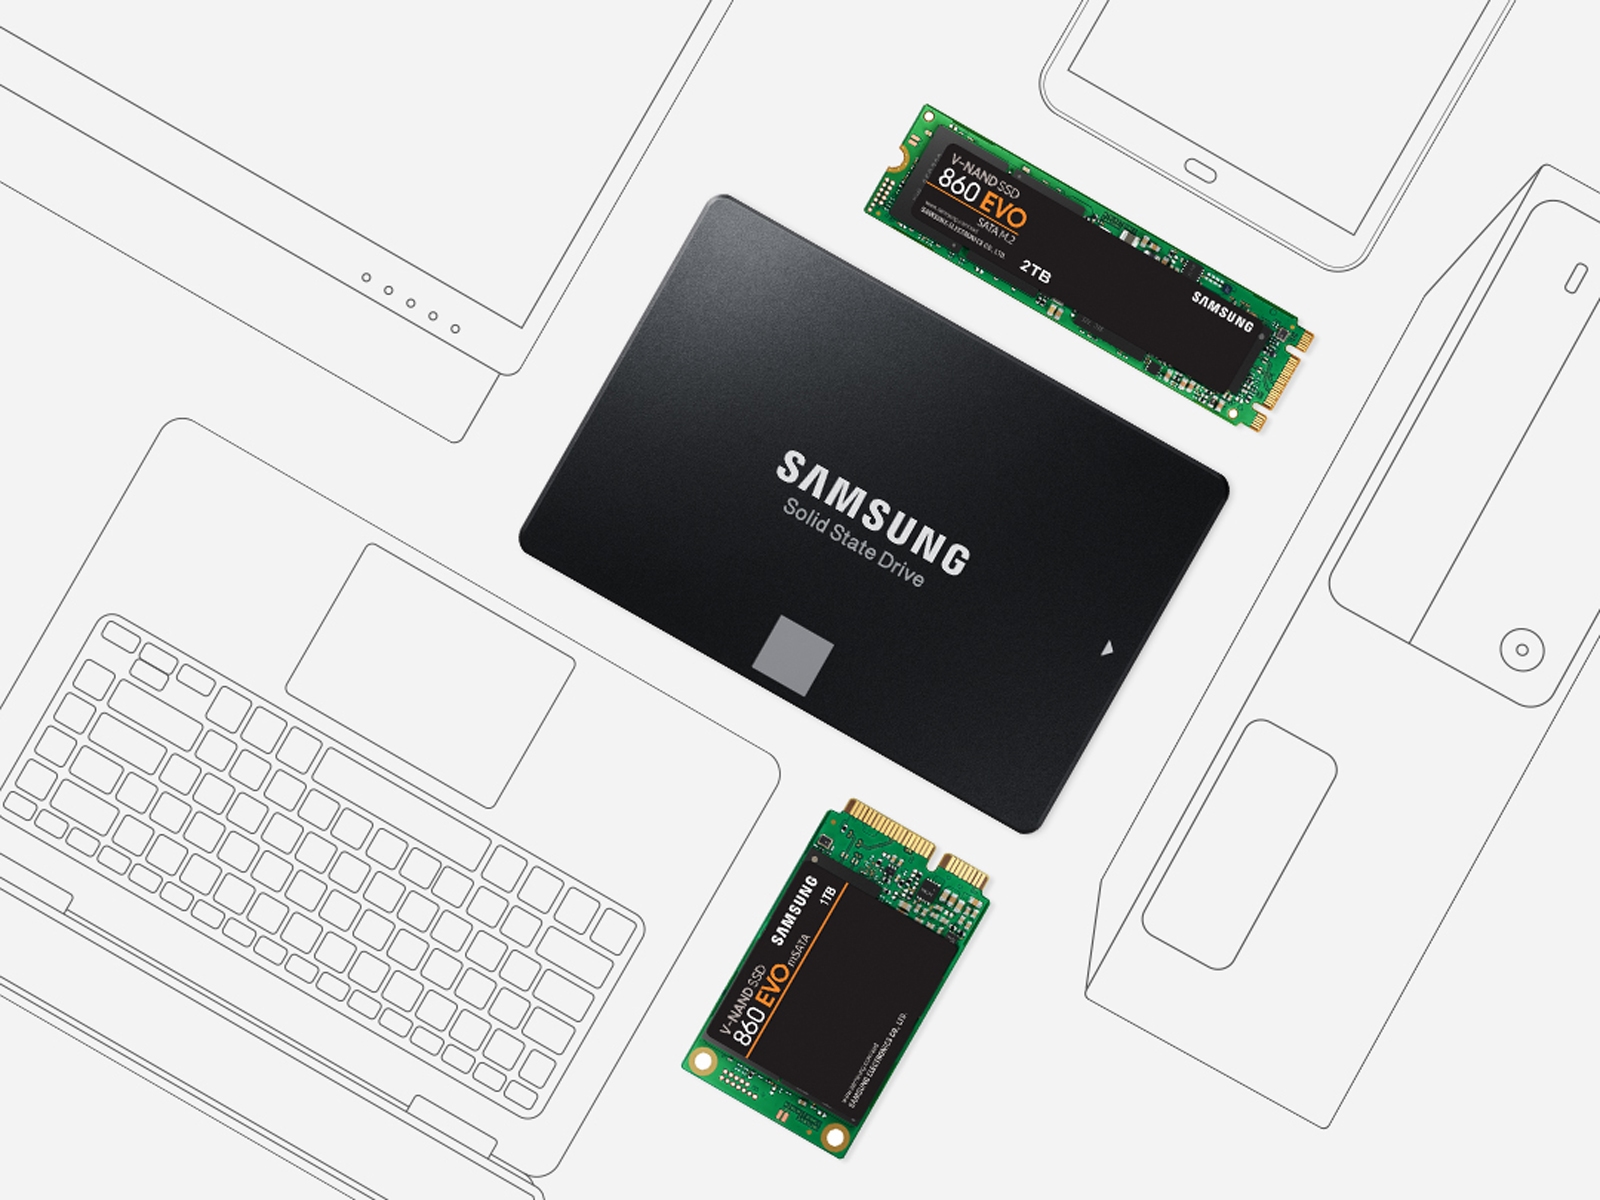 SSD 860 EVO 2.5 SATA III 500GB Memory & Storage - MZ-76E500B/AM